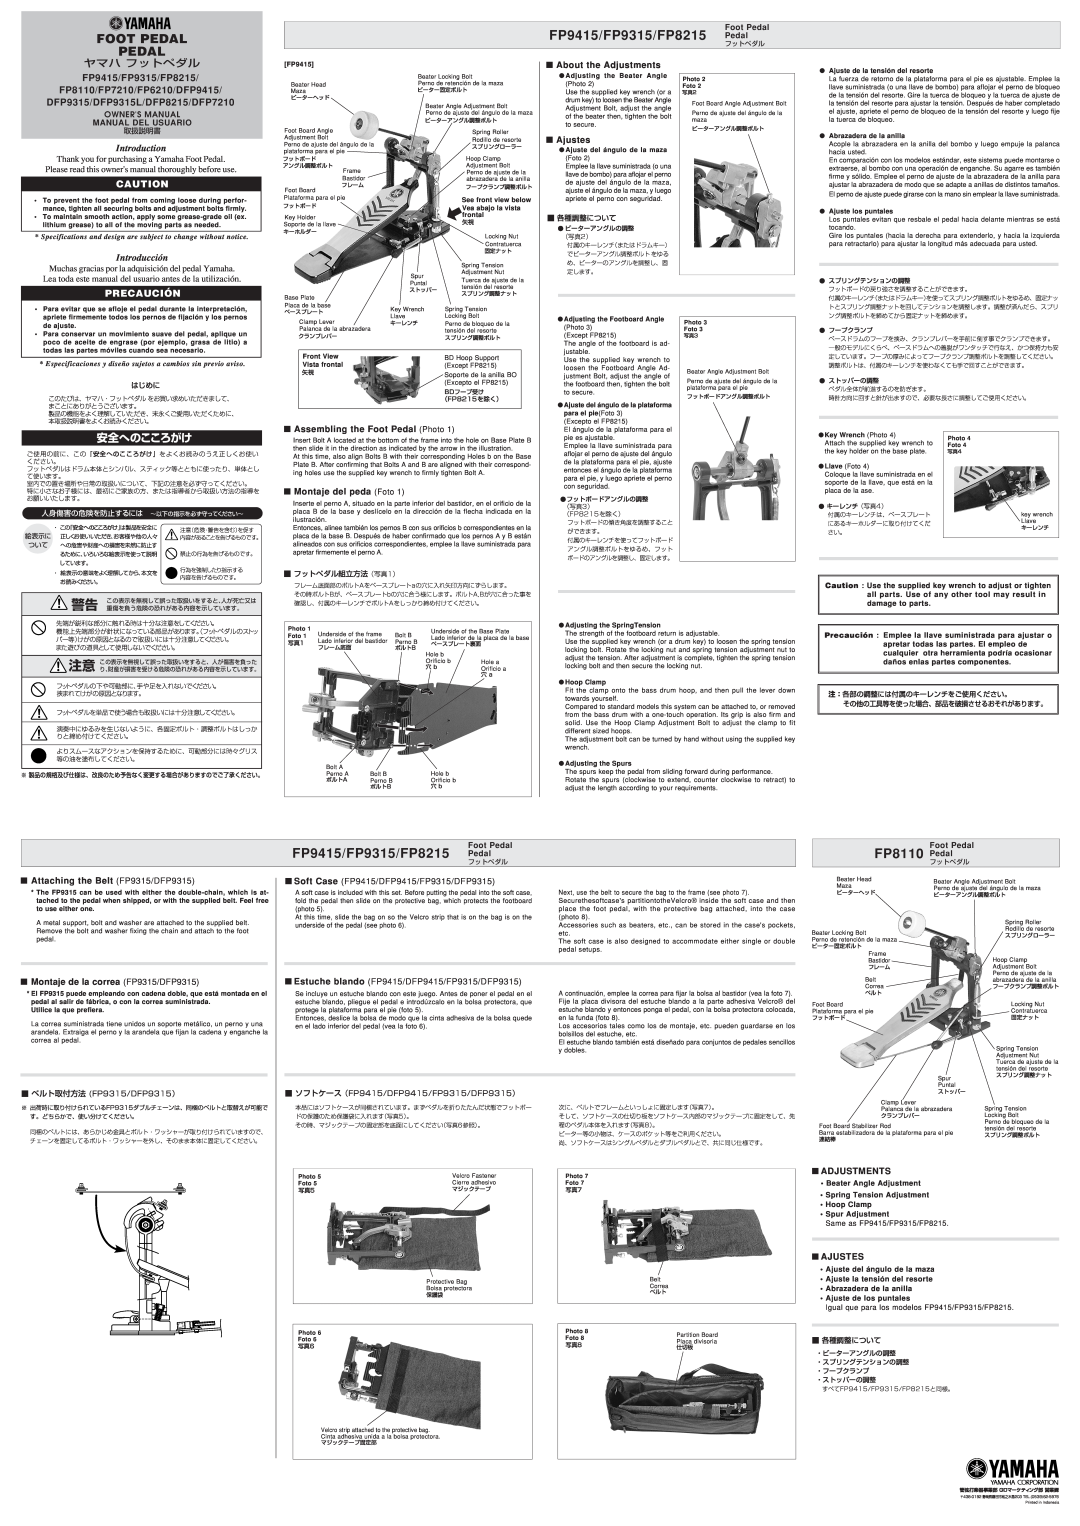 Yamaha FP7210 owner manual FP9415/FP9315/FP8215 Pedal, FP8110 Pedal, Foot Pedal Pedal, 安全へのこころがけ, ヤマハ フットペダル, Introduction 